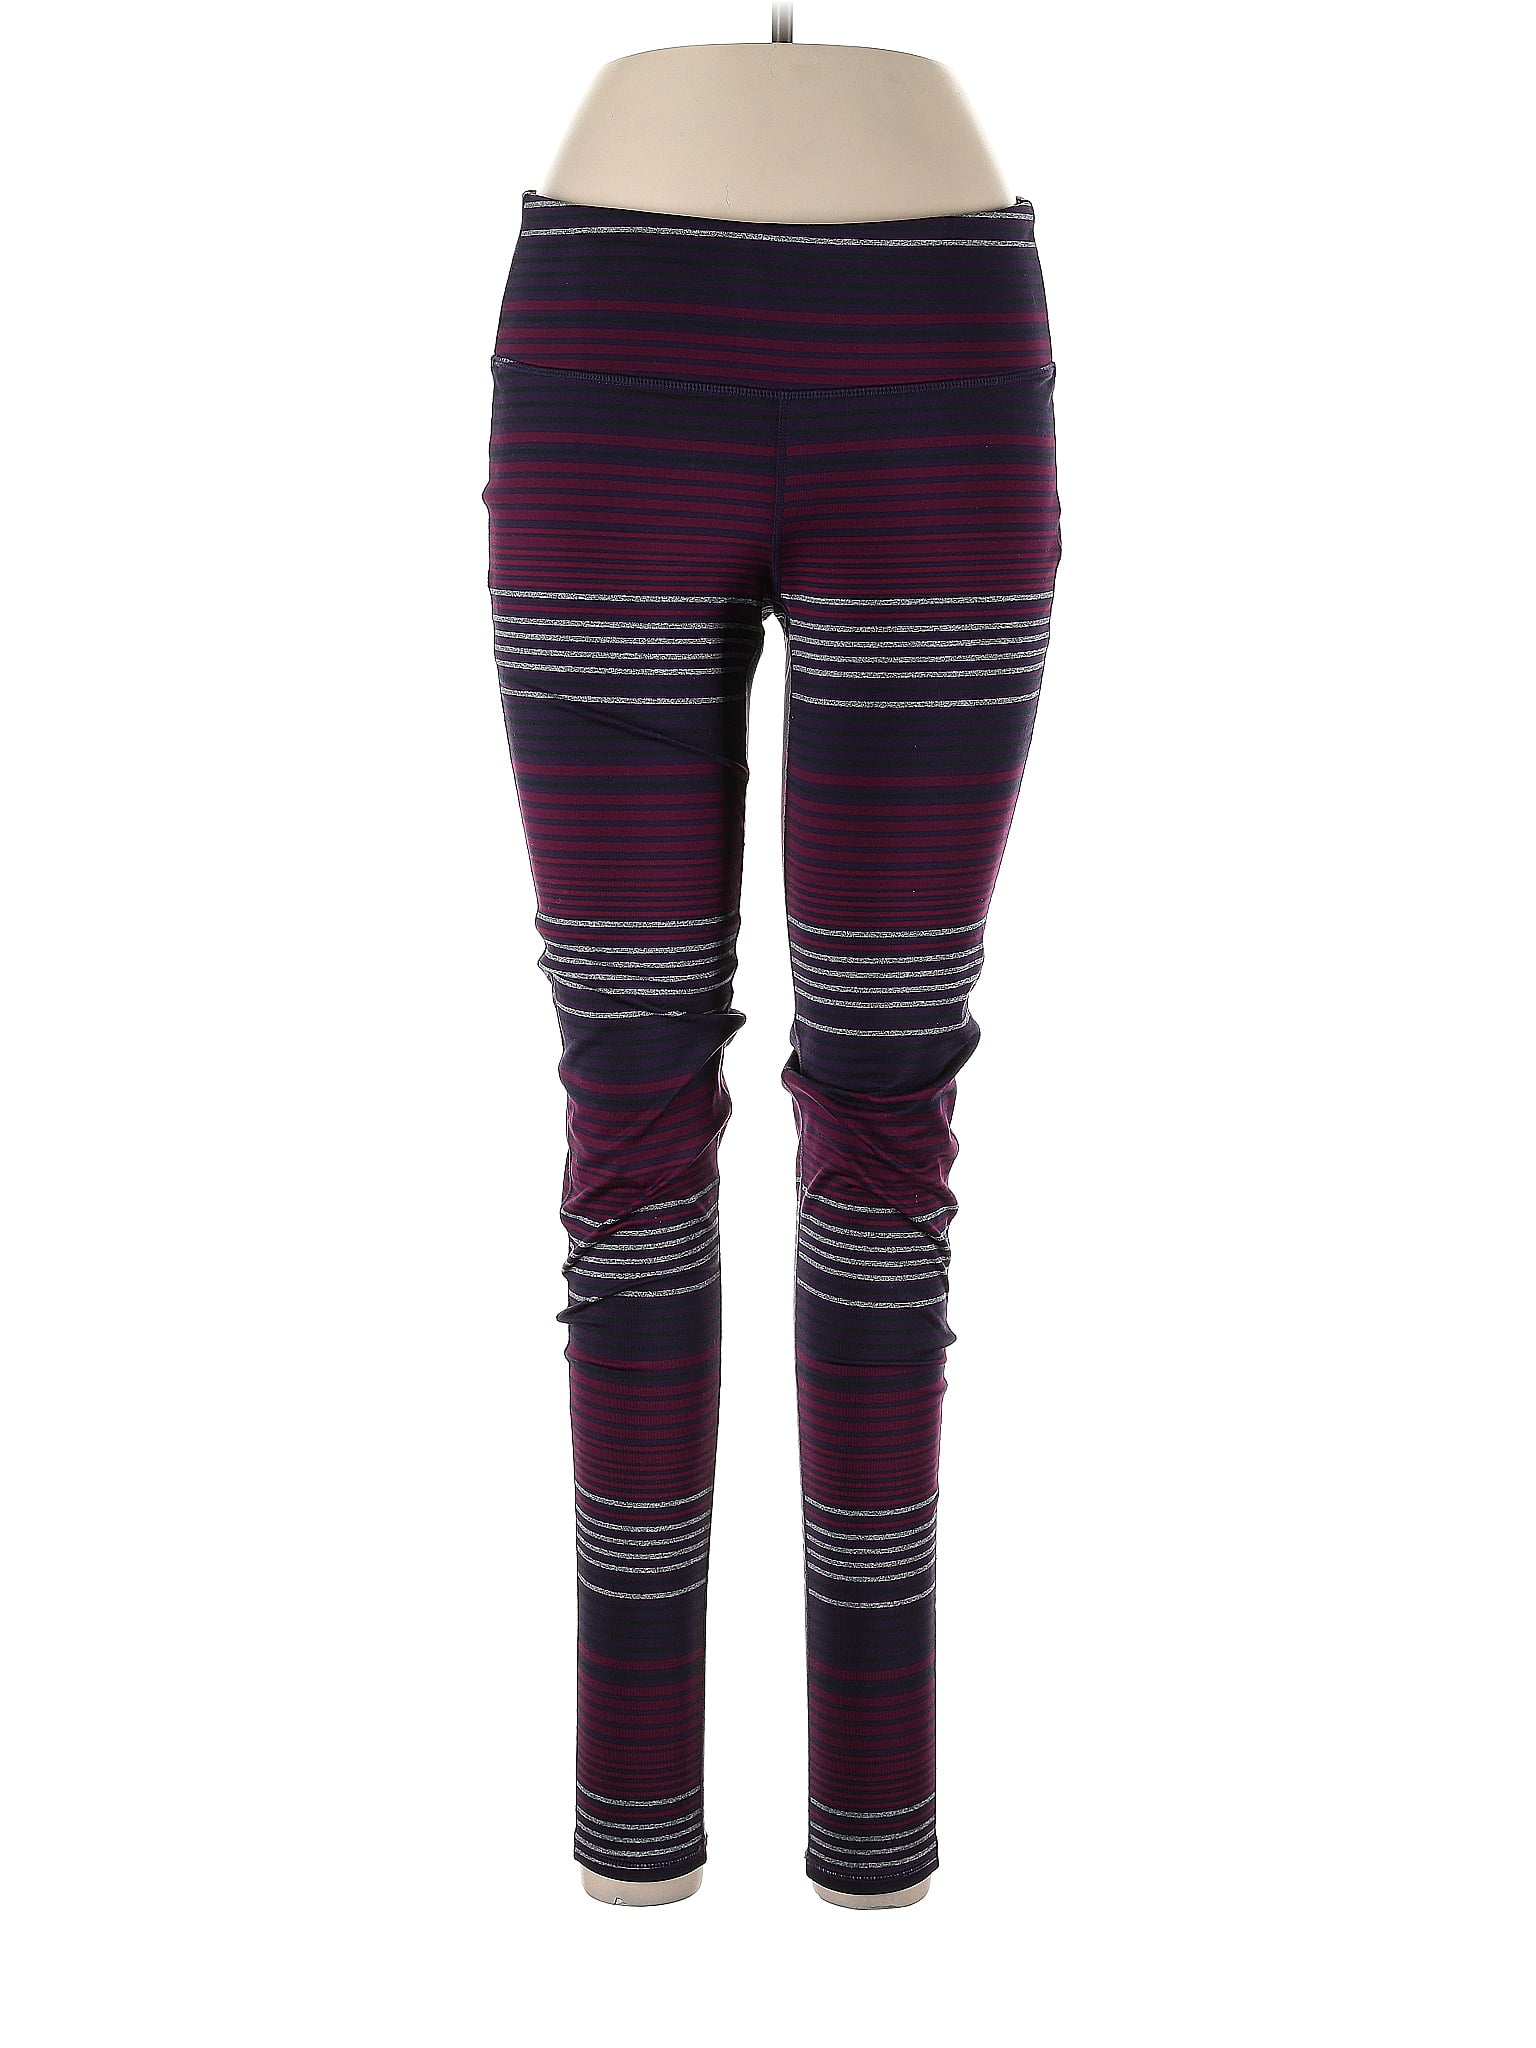 Athleta Stripes Multi Color Black Leggings Size XS - 63% off